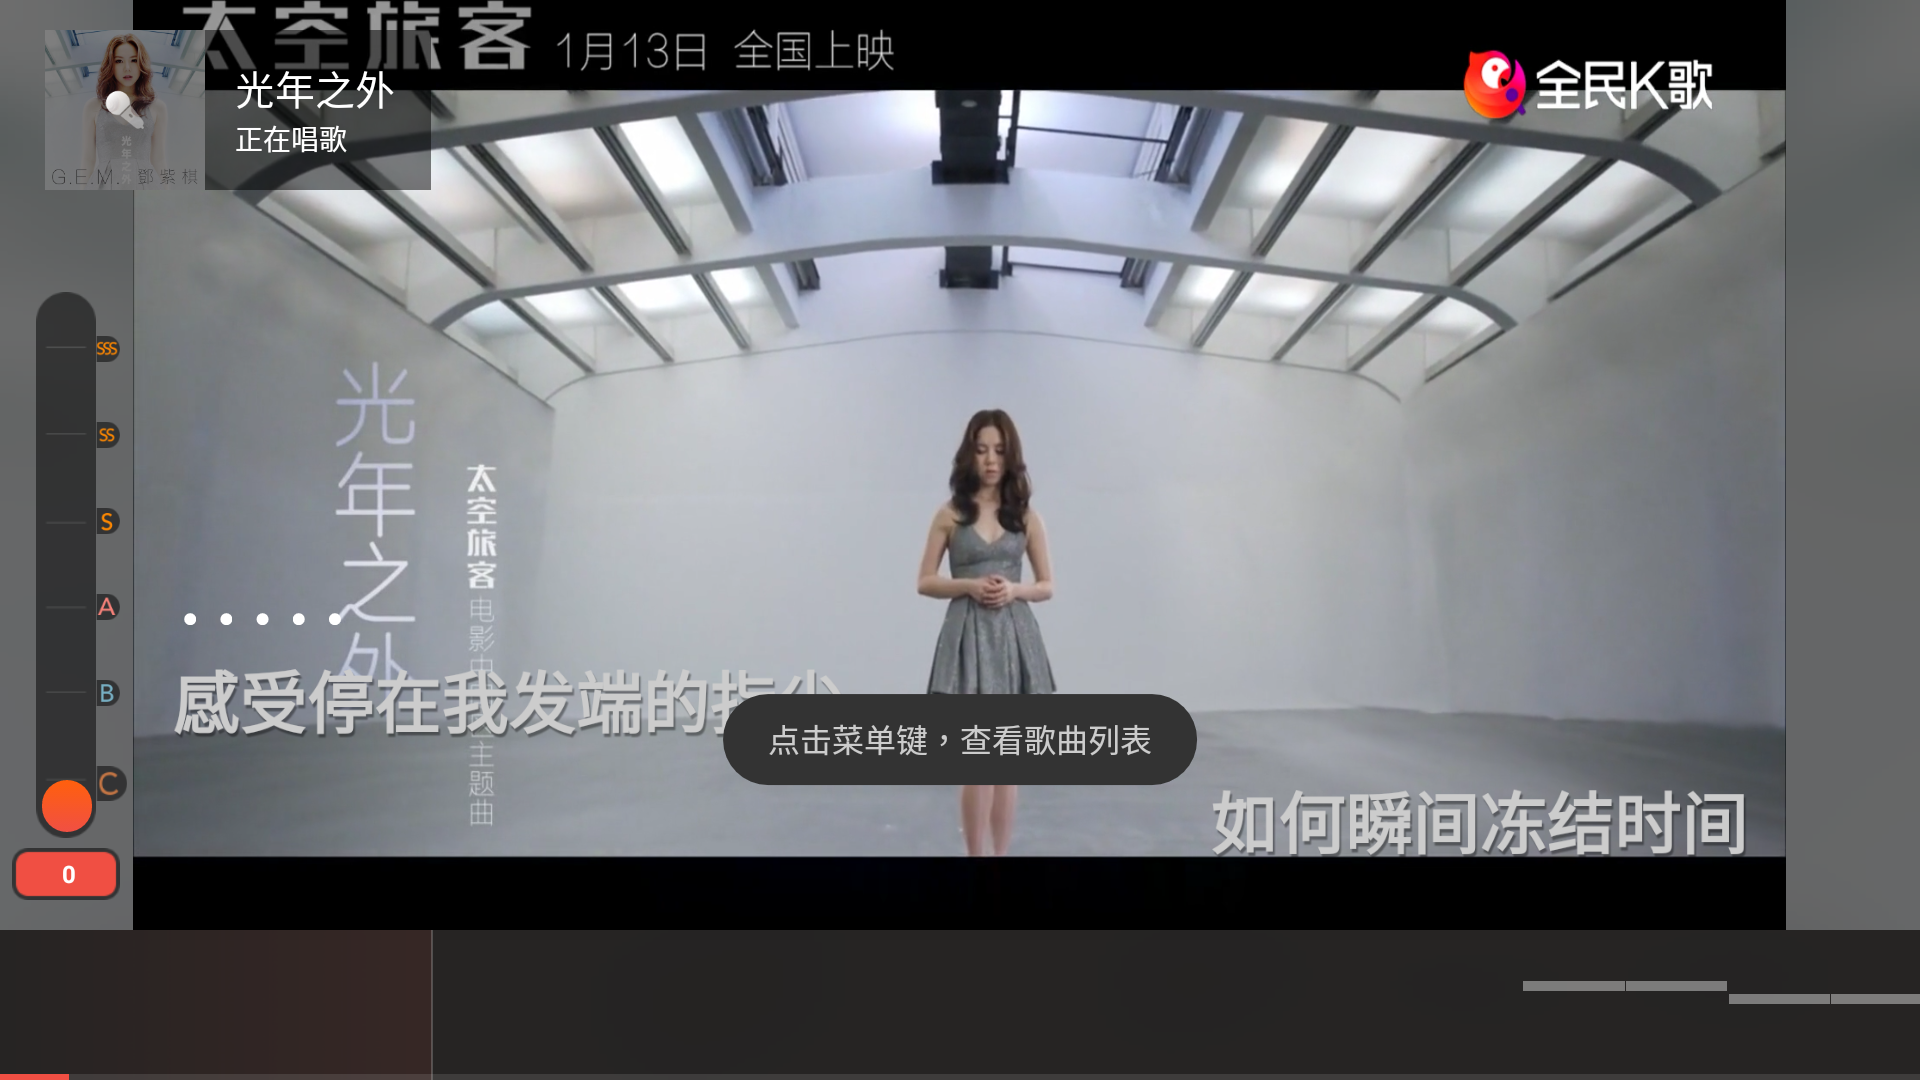 TV Pay唱歌 App ( TV Pay Karaoke app)